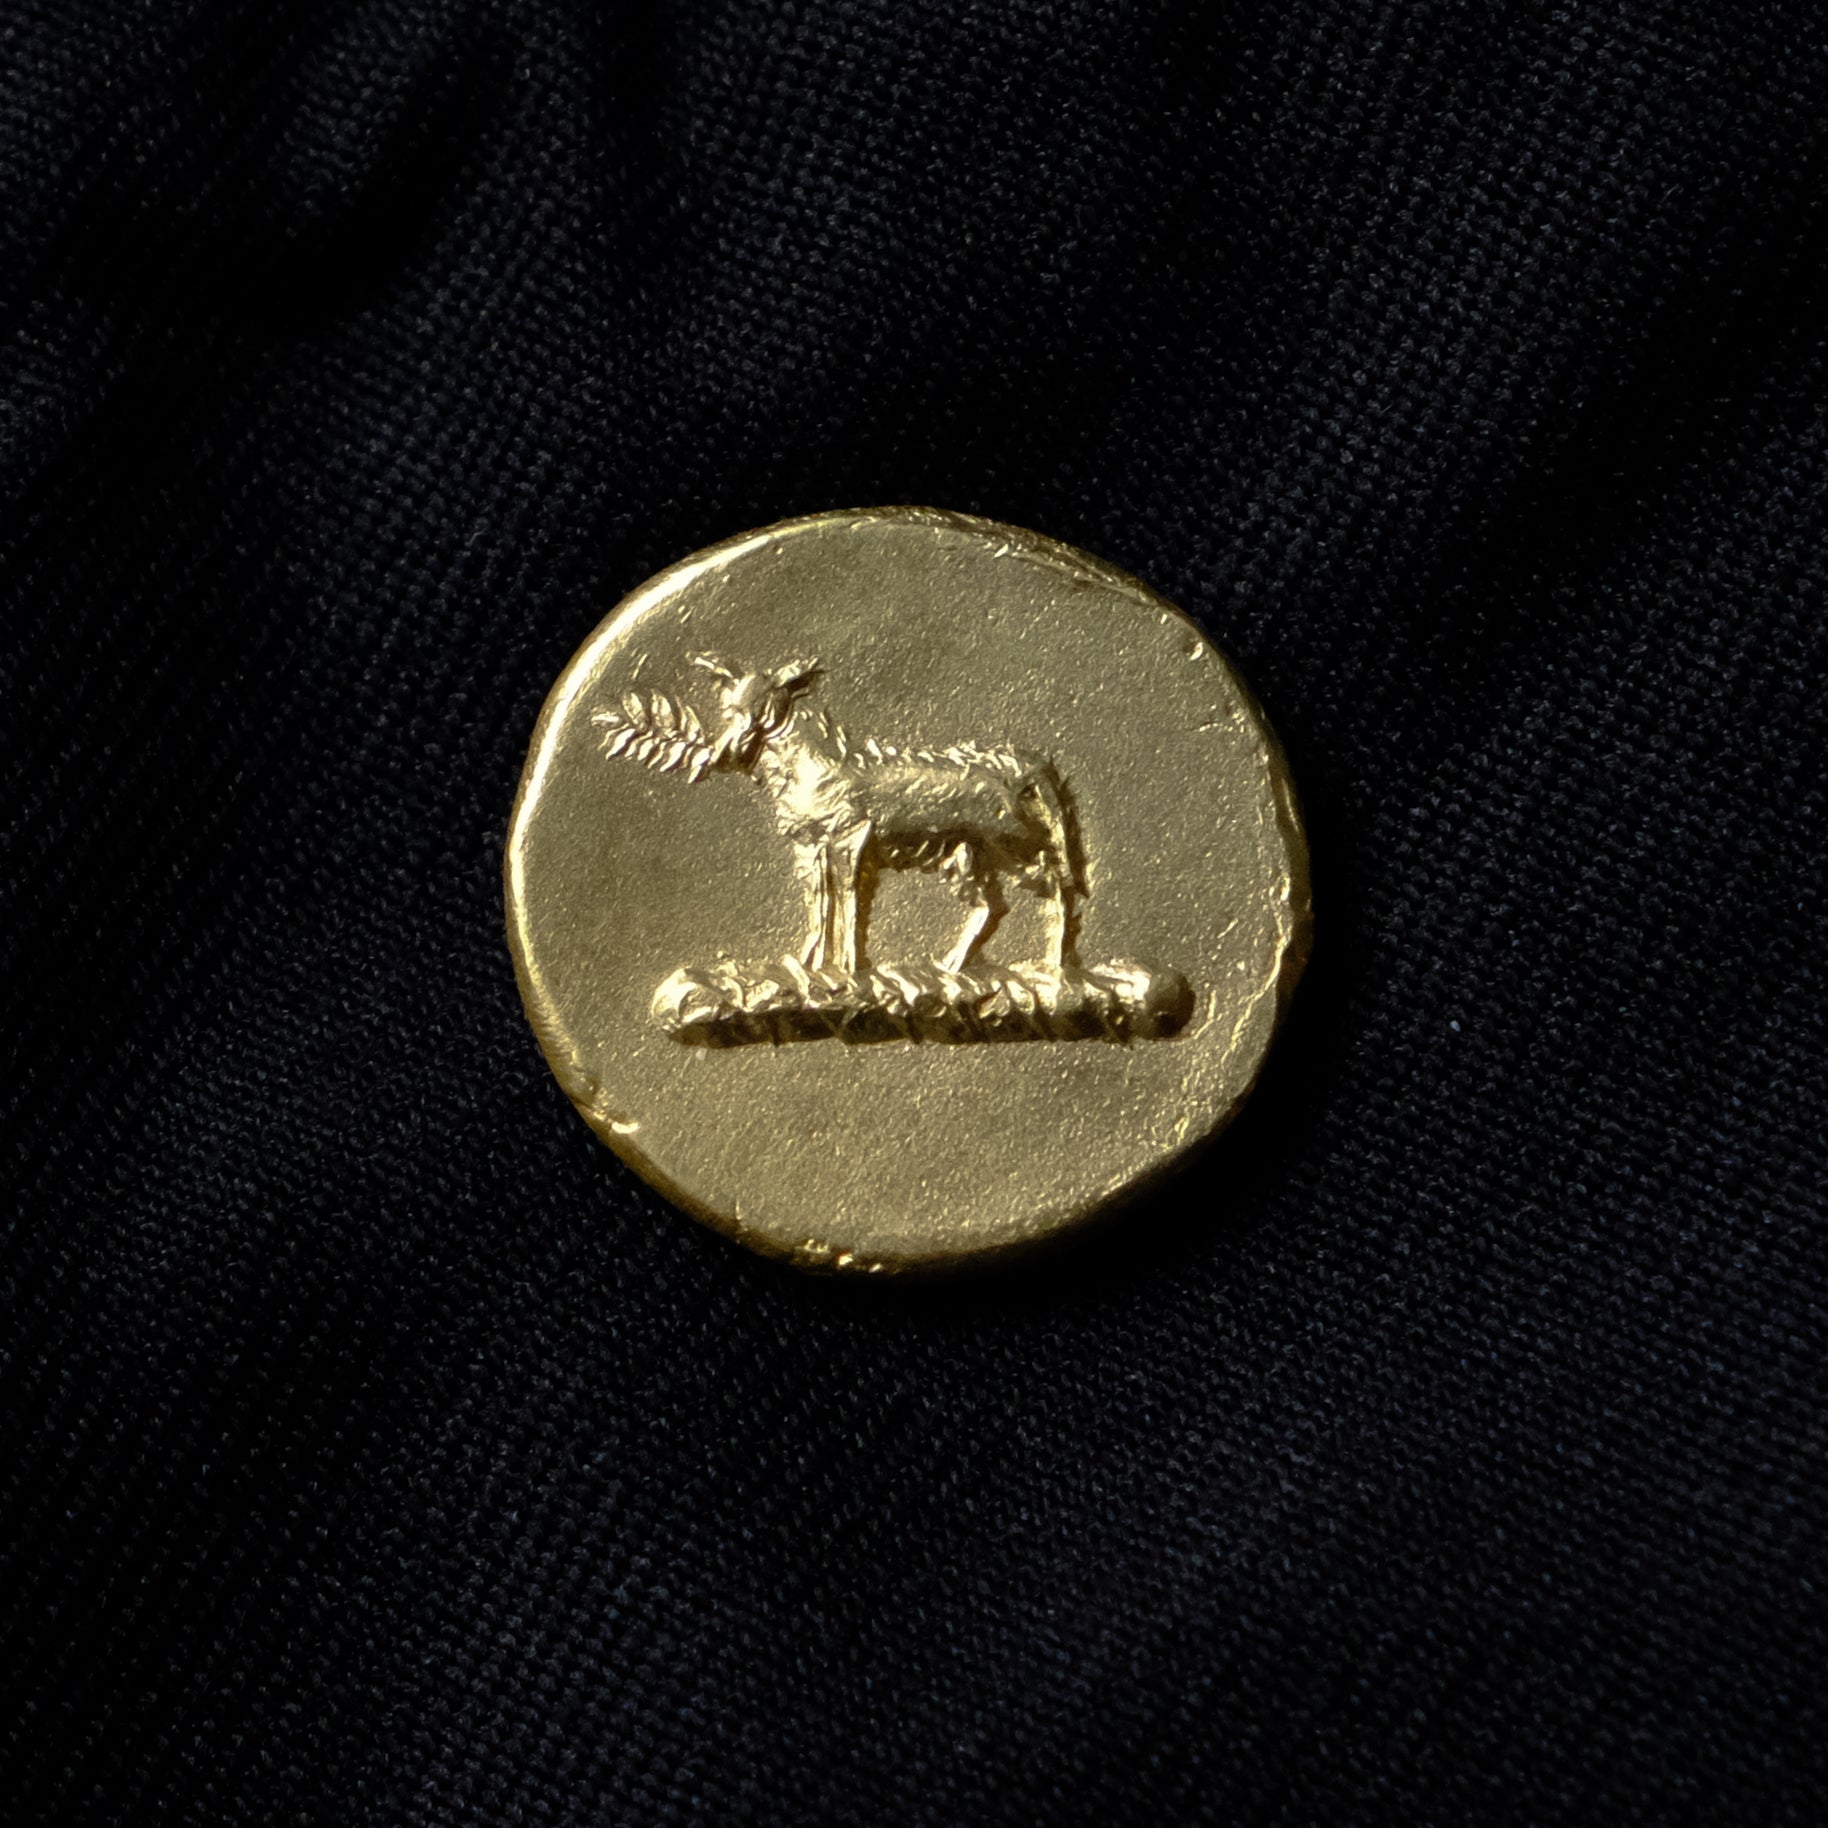 Coram Fellowship pin.18ct yellow gold.